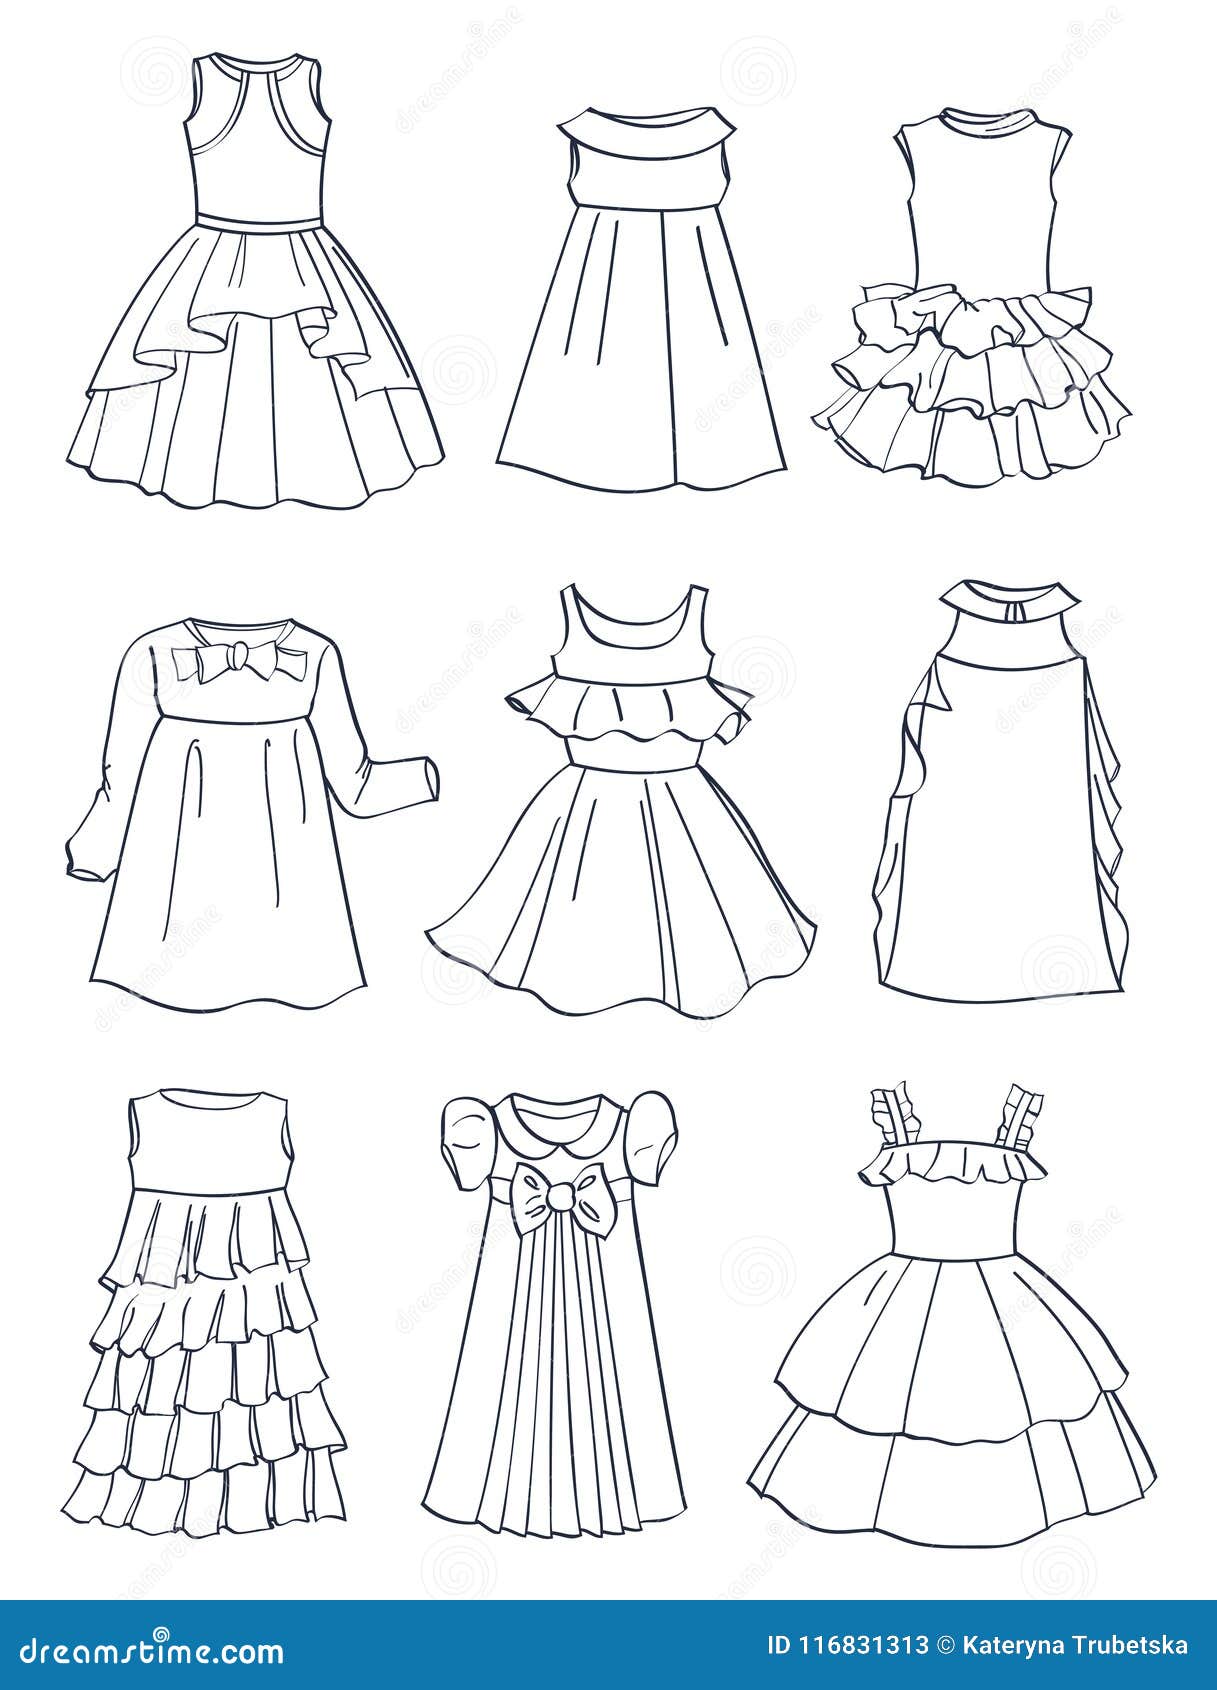 contours of festive dresses for little girls